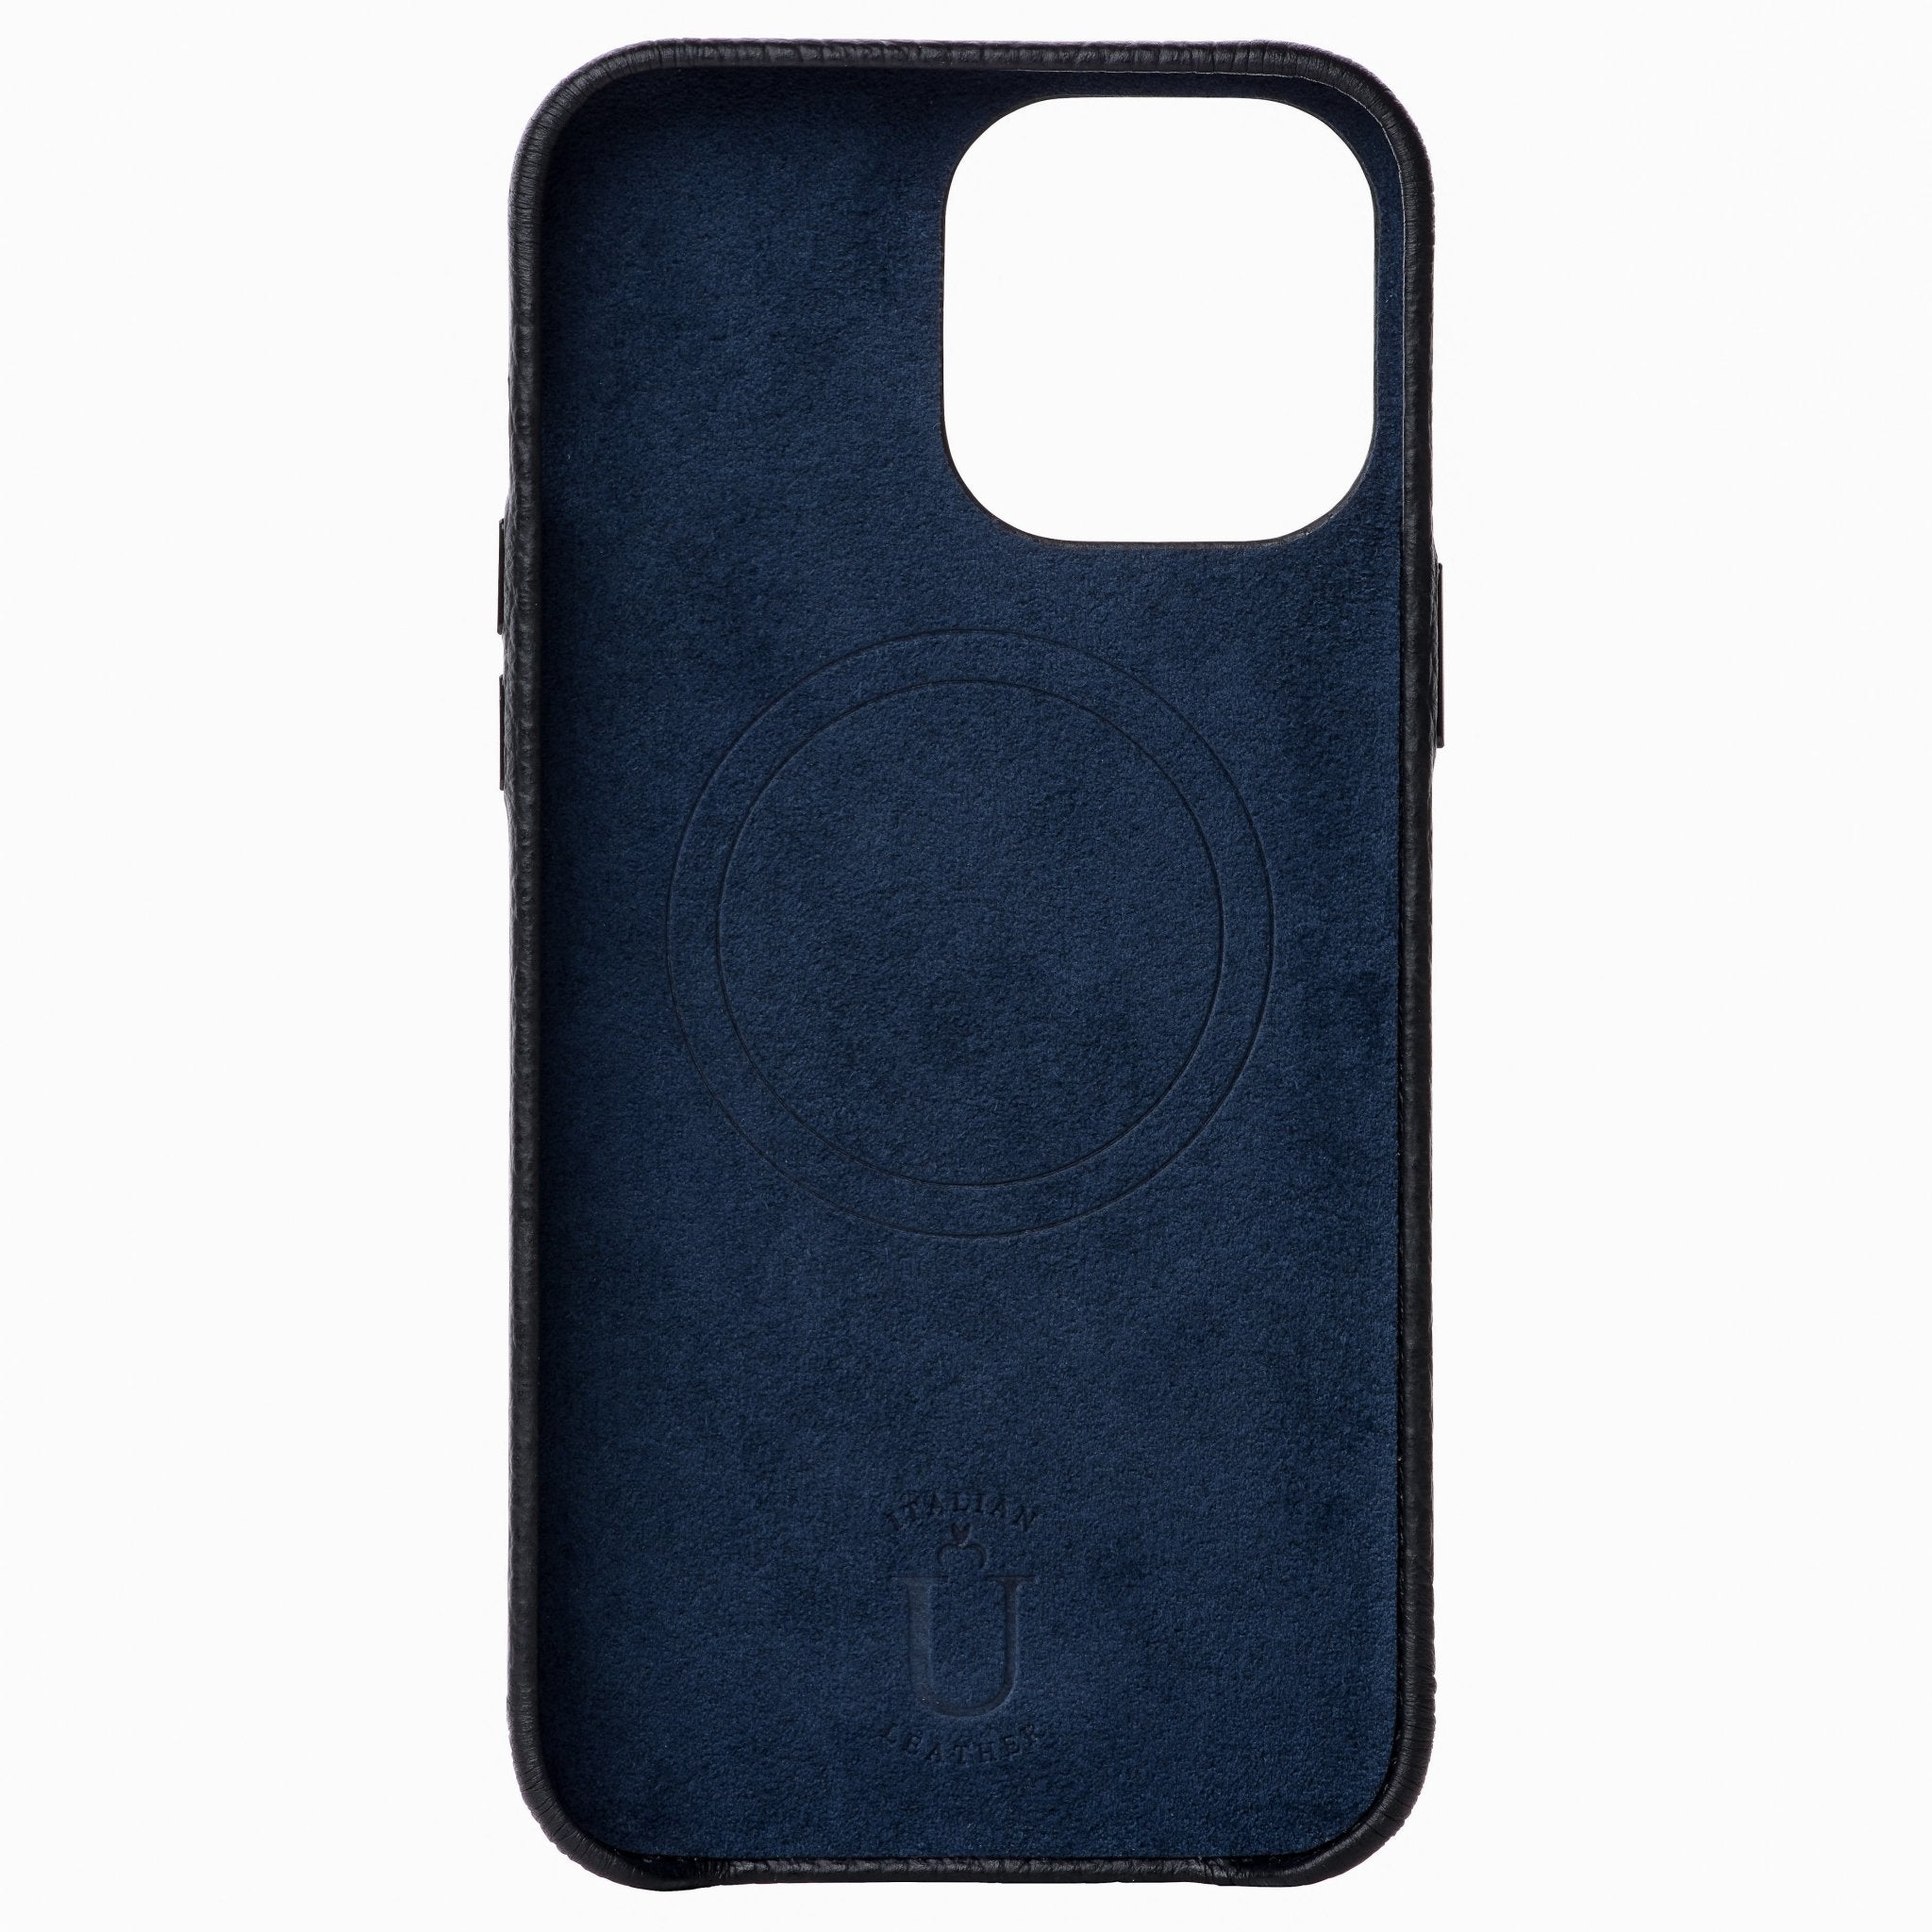 Ubique Italy Luxury iPhone Case 14 Pro Max Pebble Grain Leather Classic Black Inner Lining